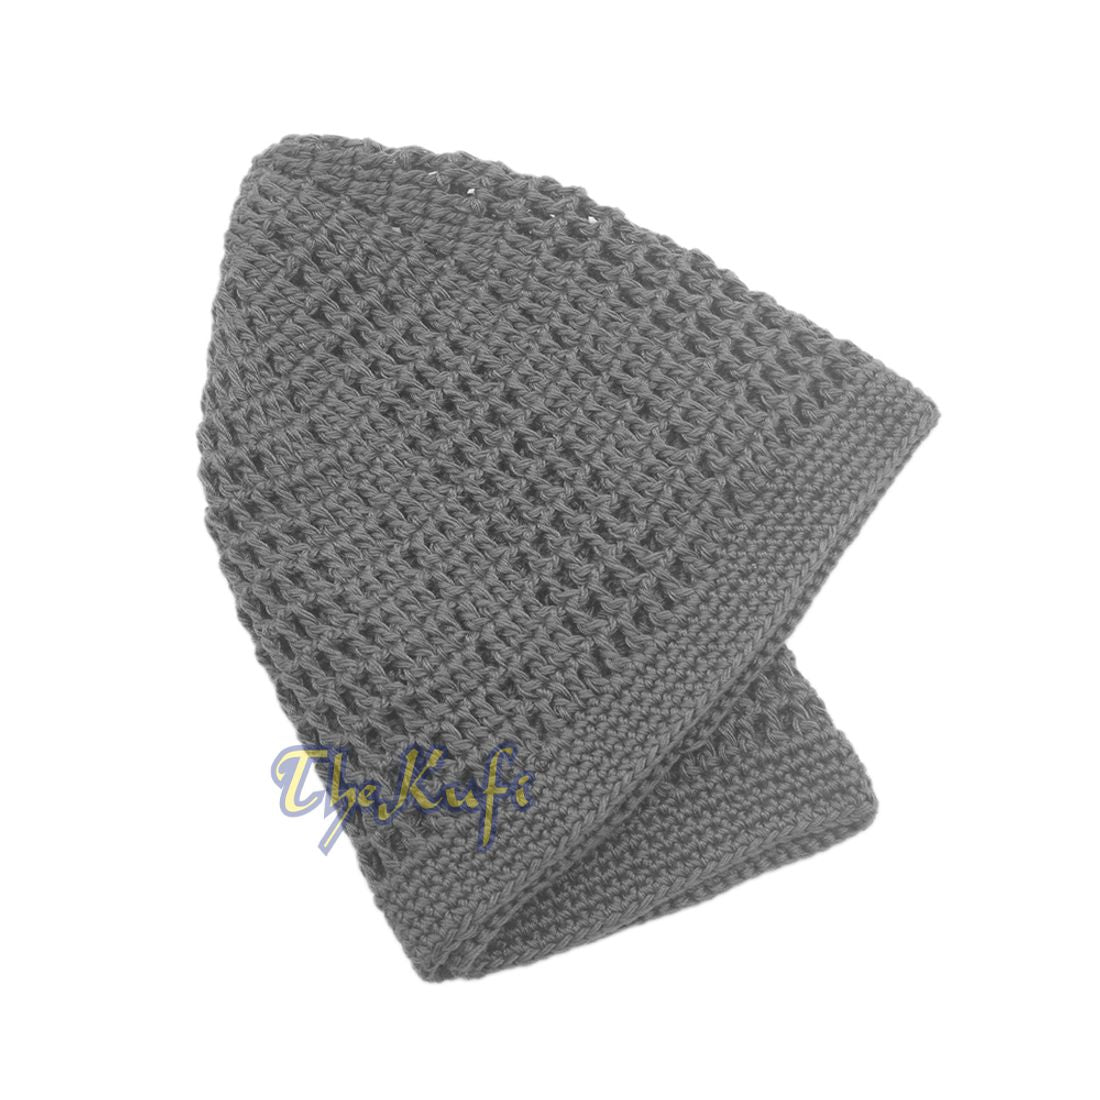 Skull Cap Kufi Cotton Dark Gray Tight & Loose Weave Design Crochet Knit Head Cover